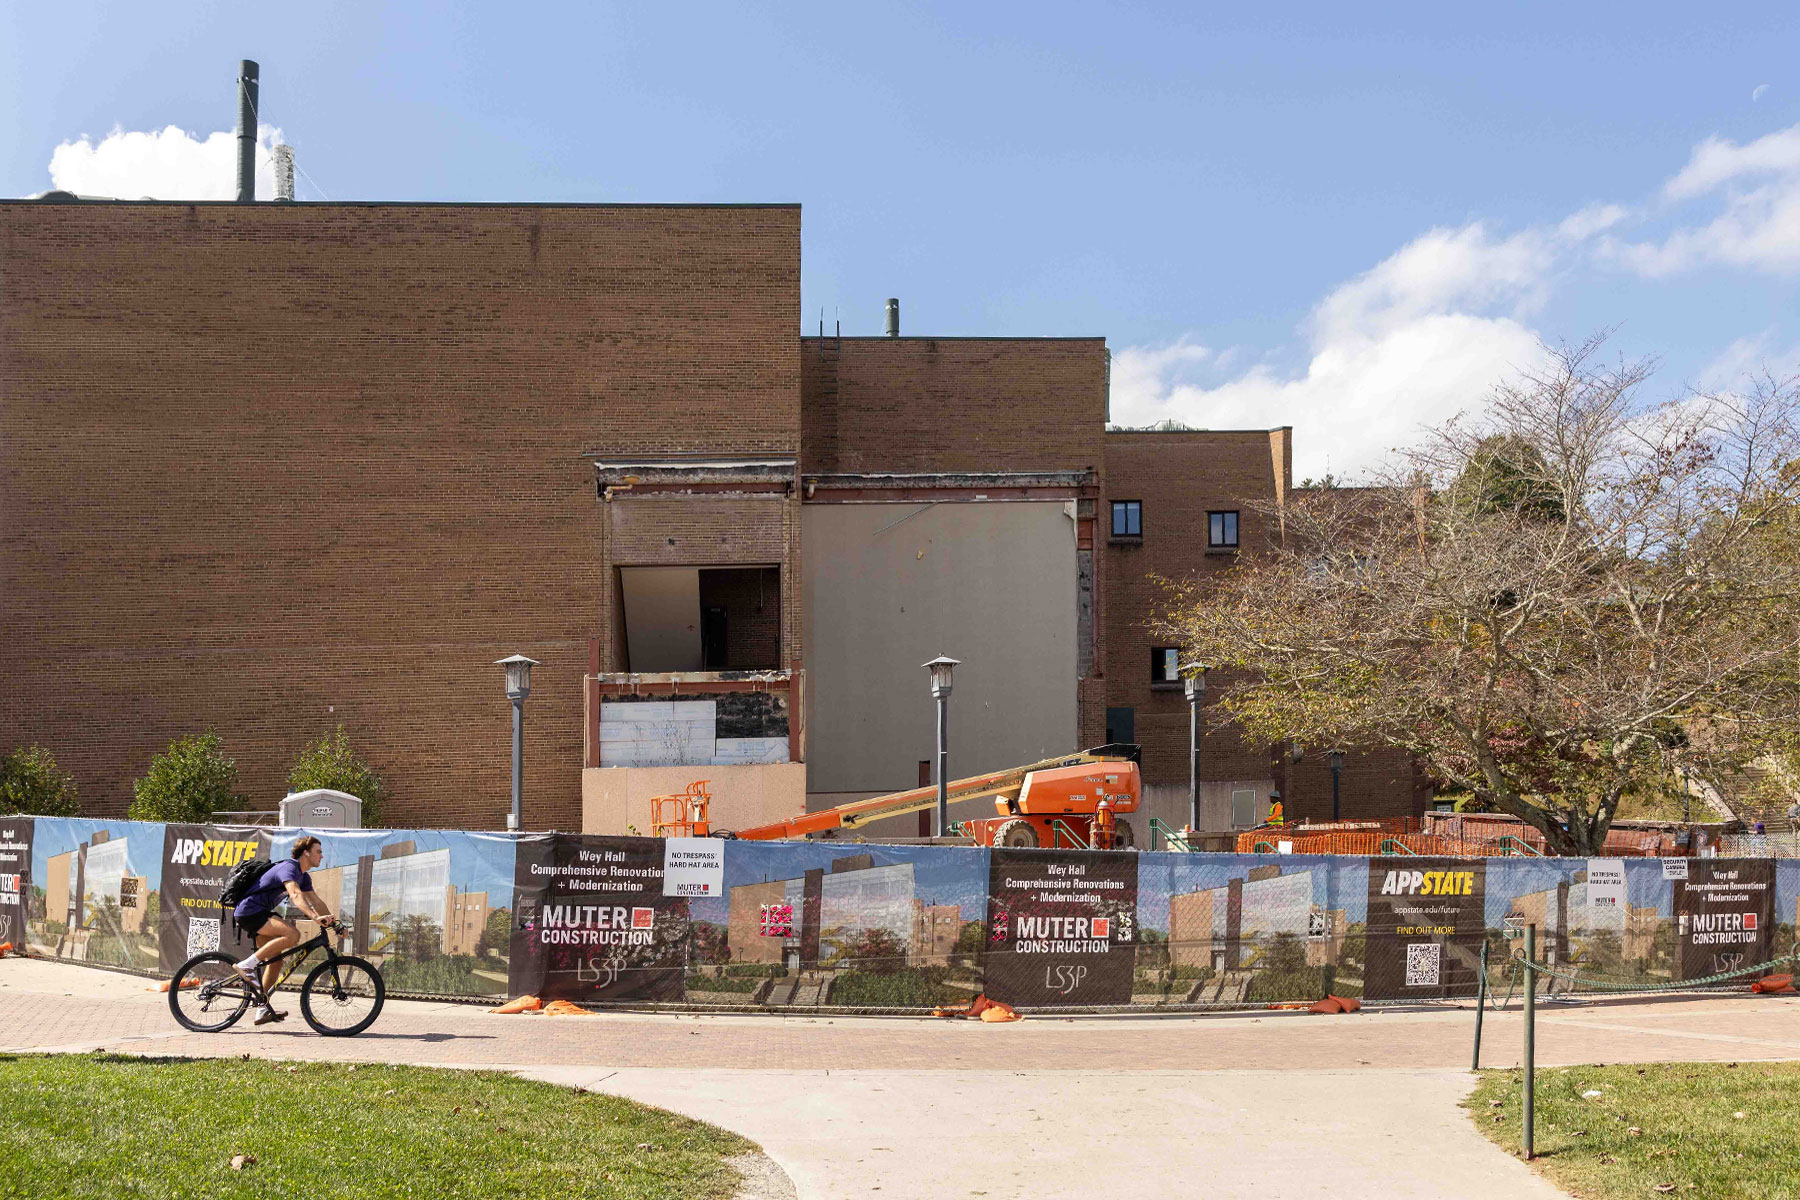 ?Progress on the demolition work for Wey Hall